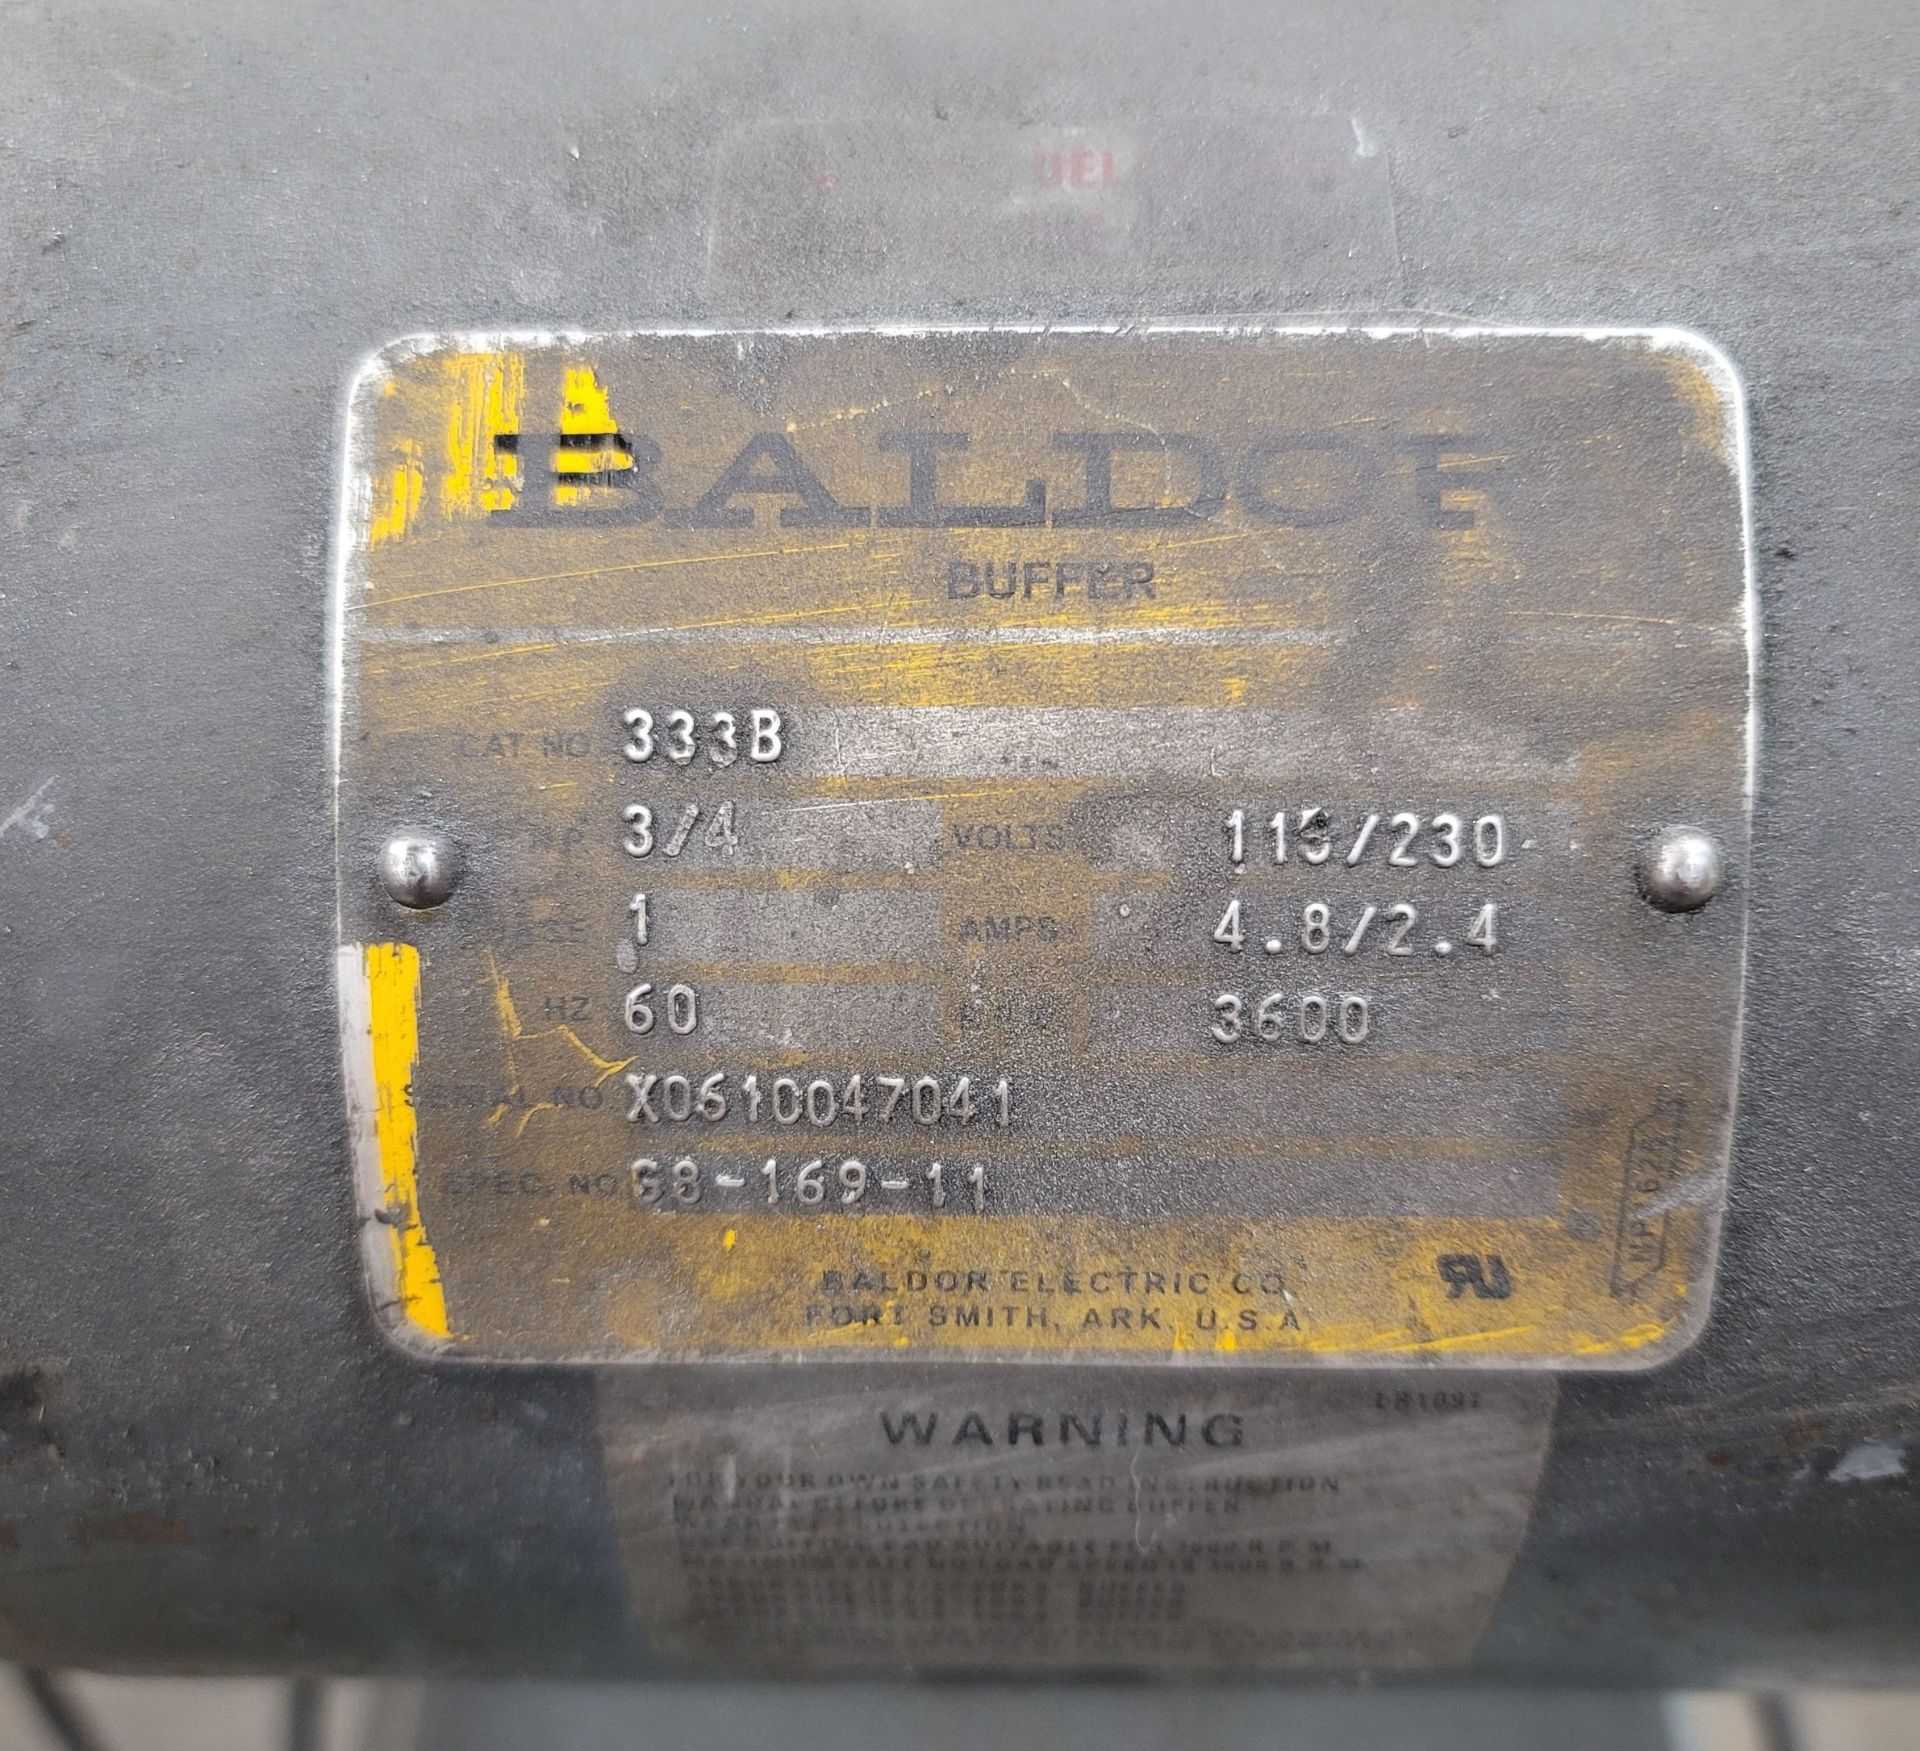 BALDOR 3/4 HP DOUBLE-END PEDESTAL GRINDER, MODEL 333B, 3,600 RPM, S/N X0610047041 - Image 2 of 2